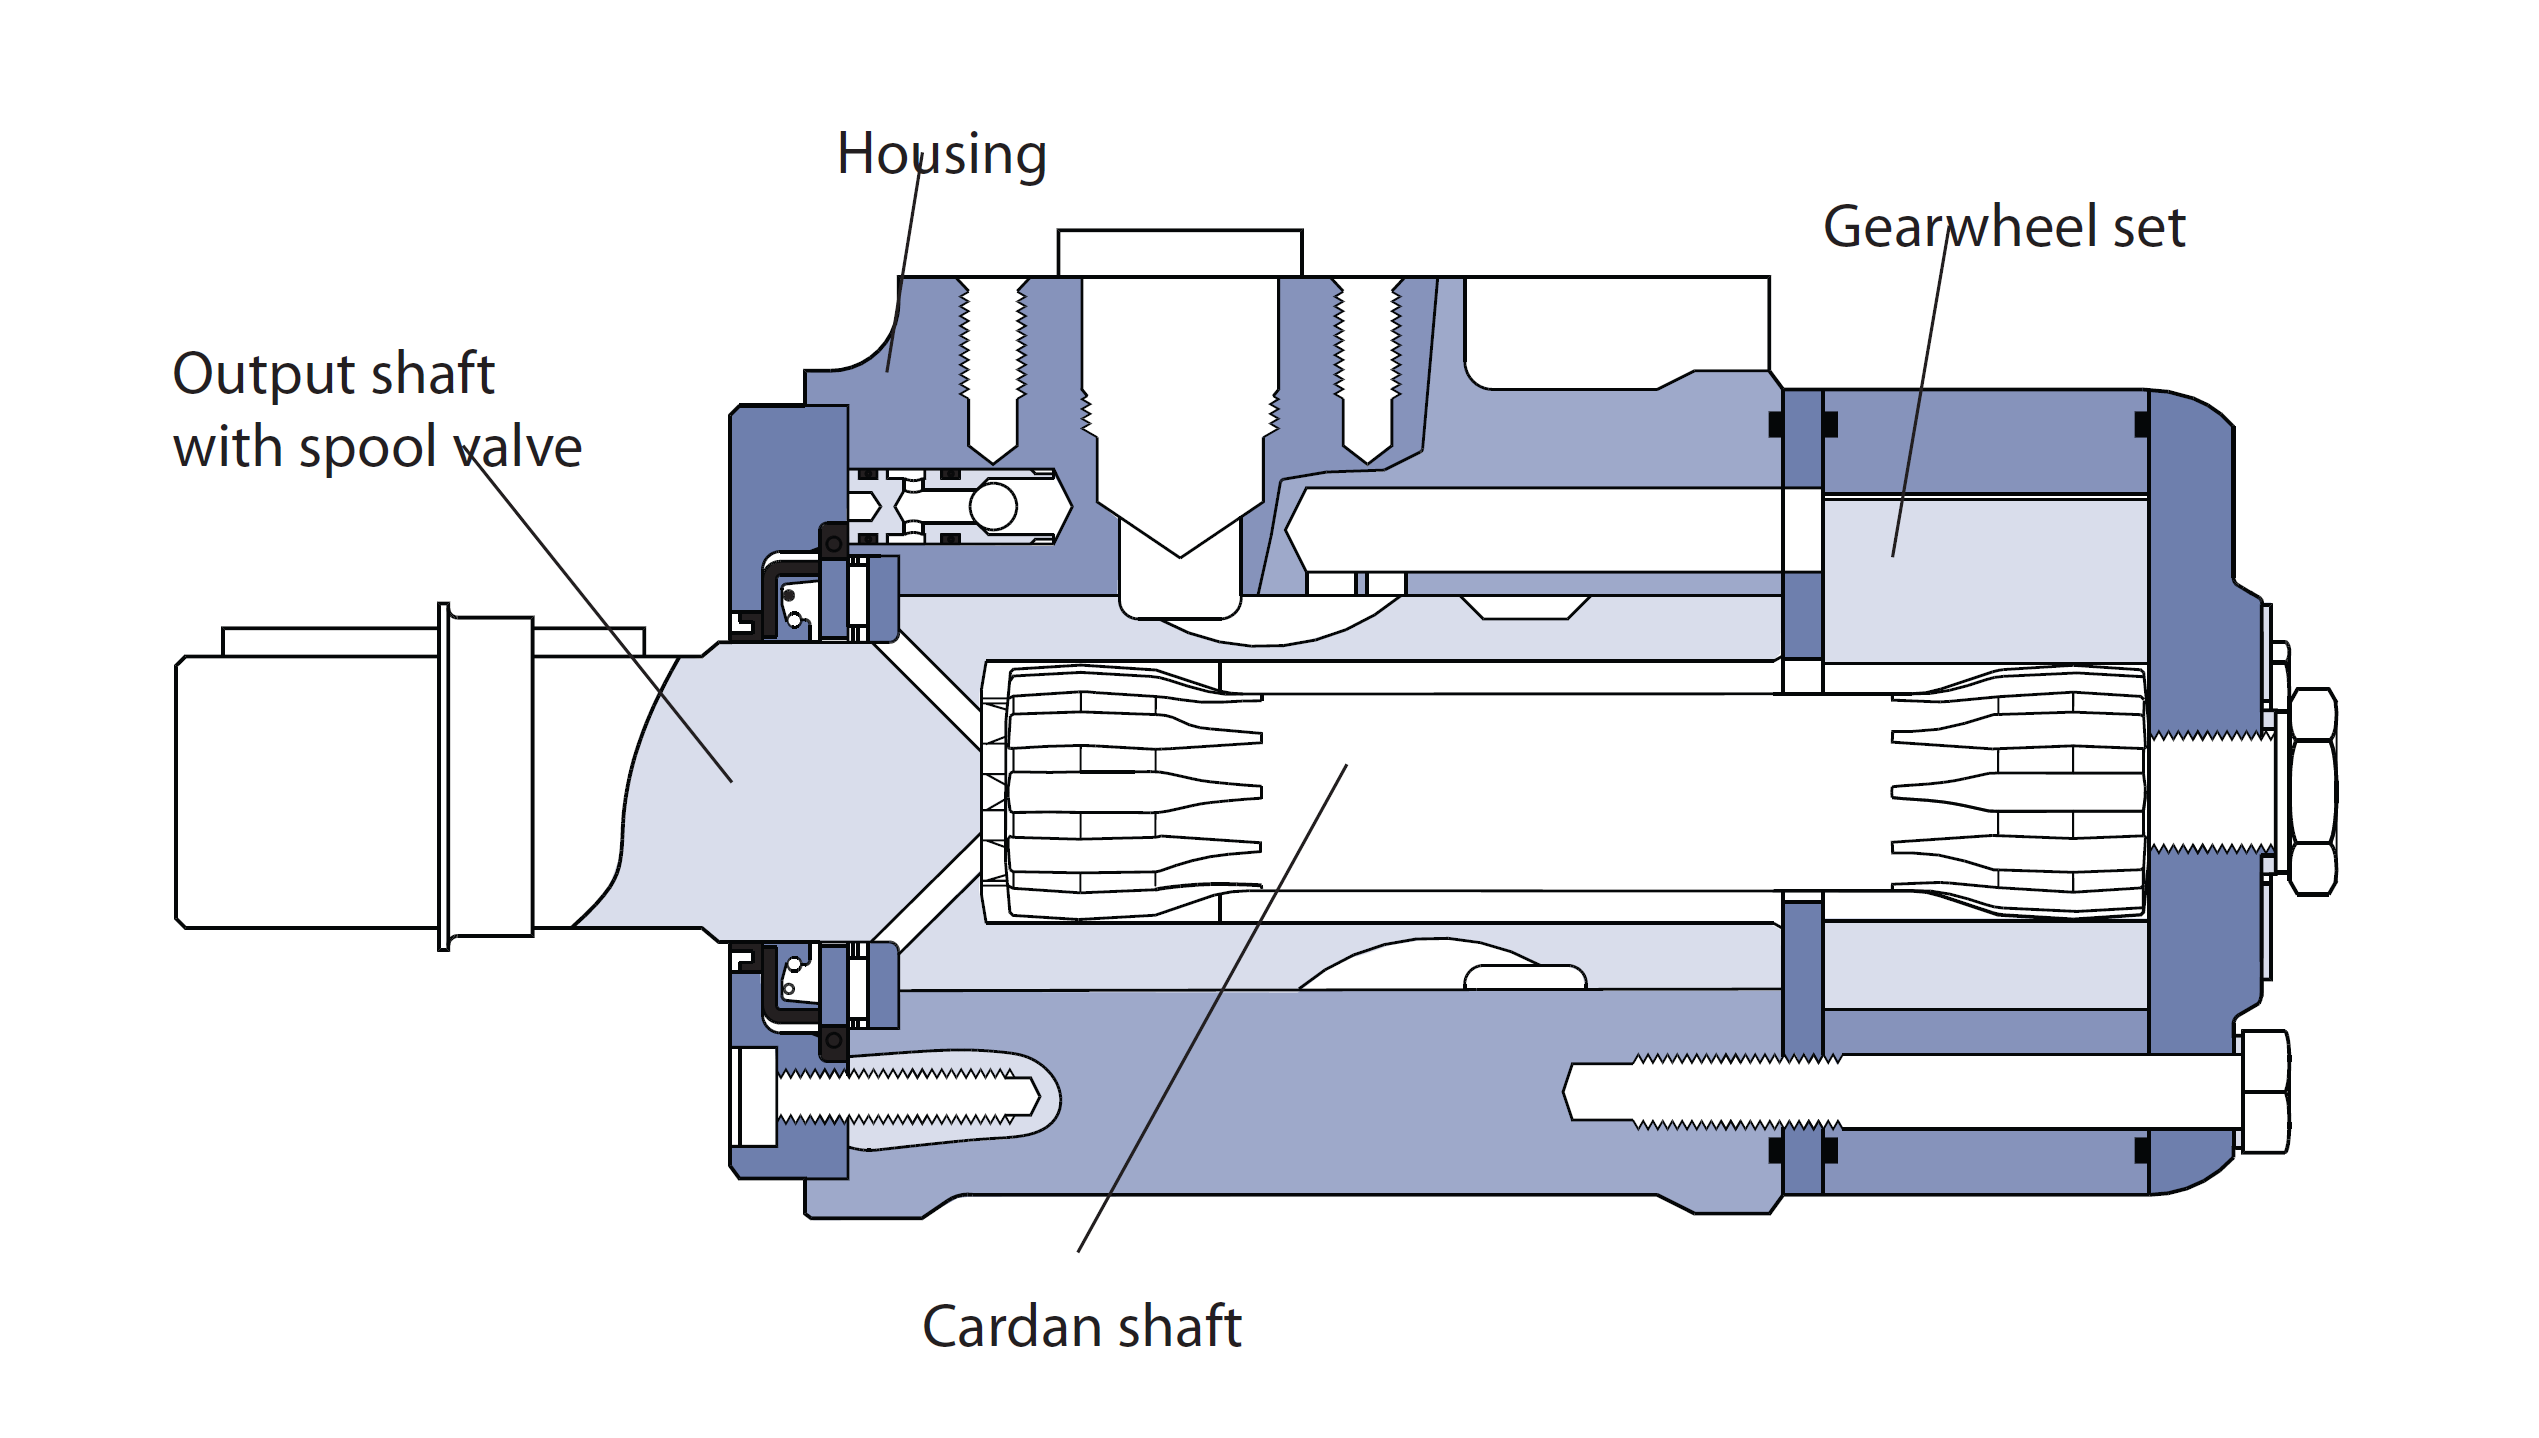 Orbtal motor cutaway view showing the cardan shaft